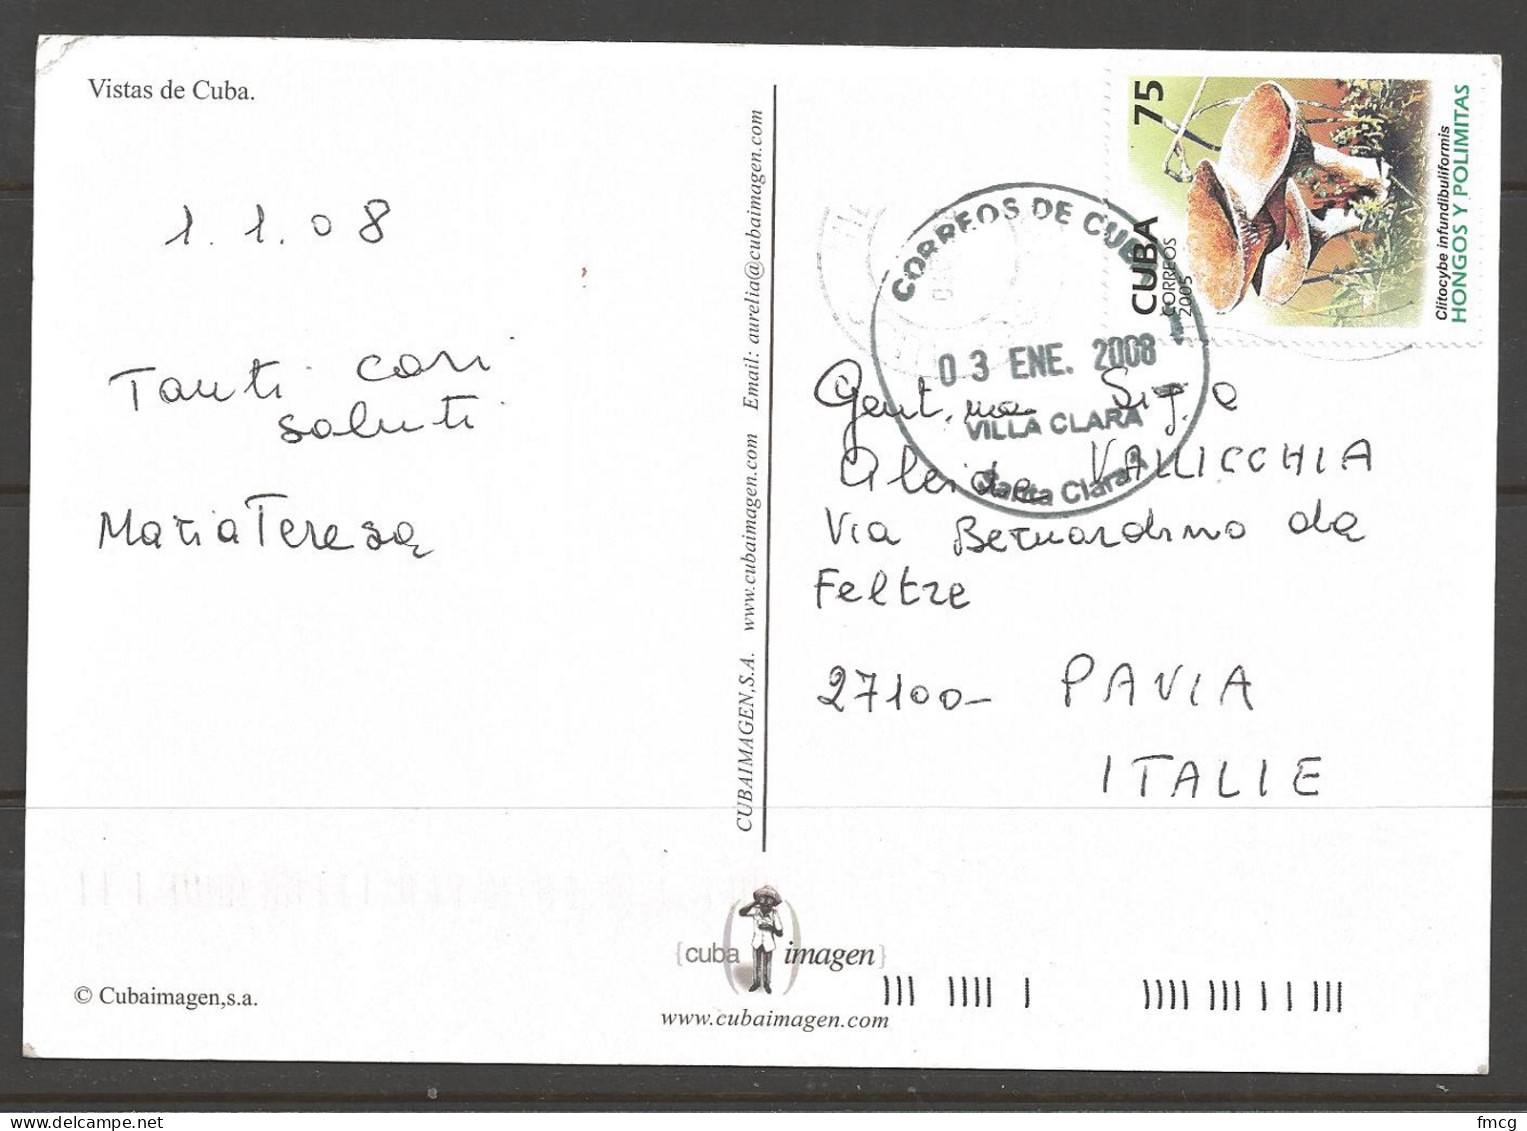 Postcard Mailed From Cuba To Pavia Italy 2008 03 ENE, Mushroom - 2001-10: Marcofilie